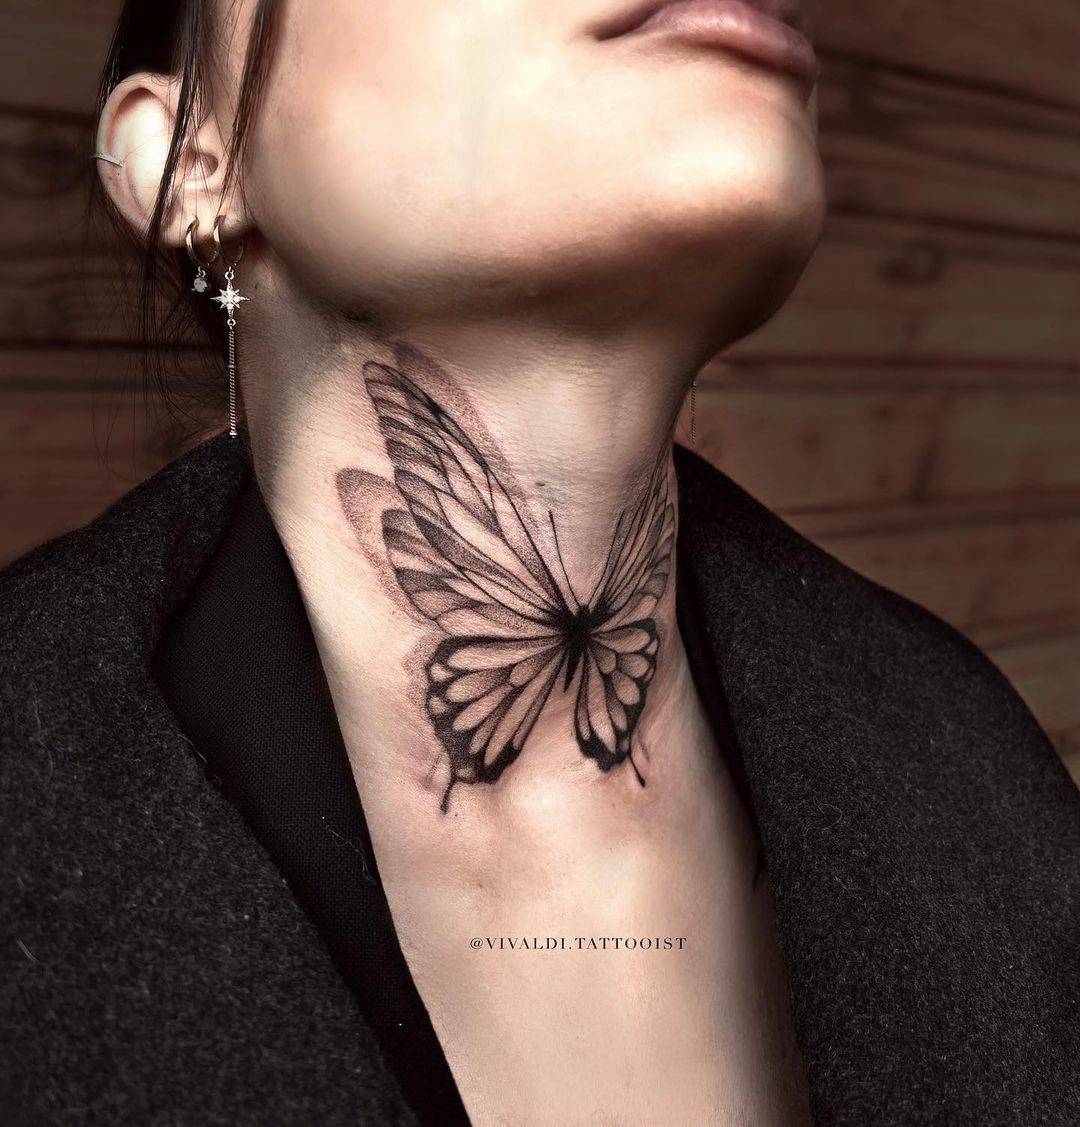 Big Black Butterfly Tattoo on Neck